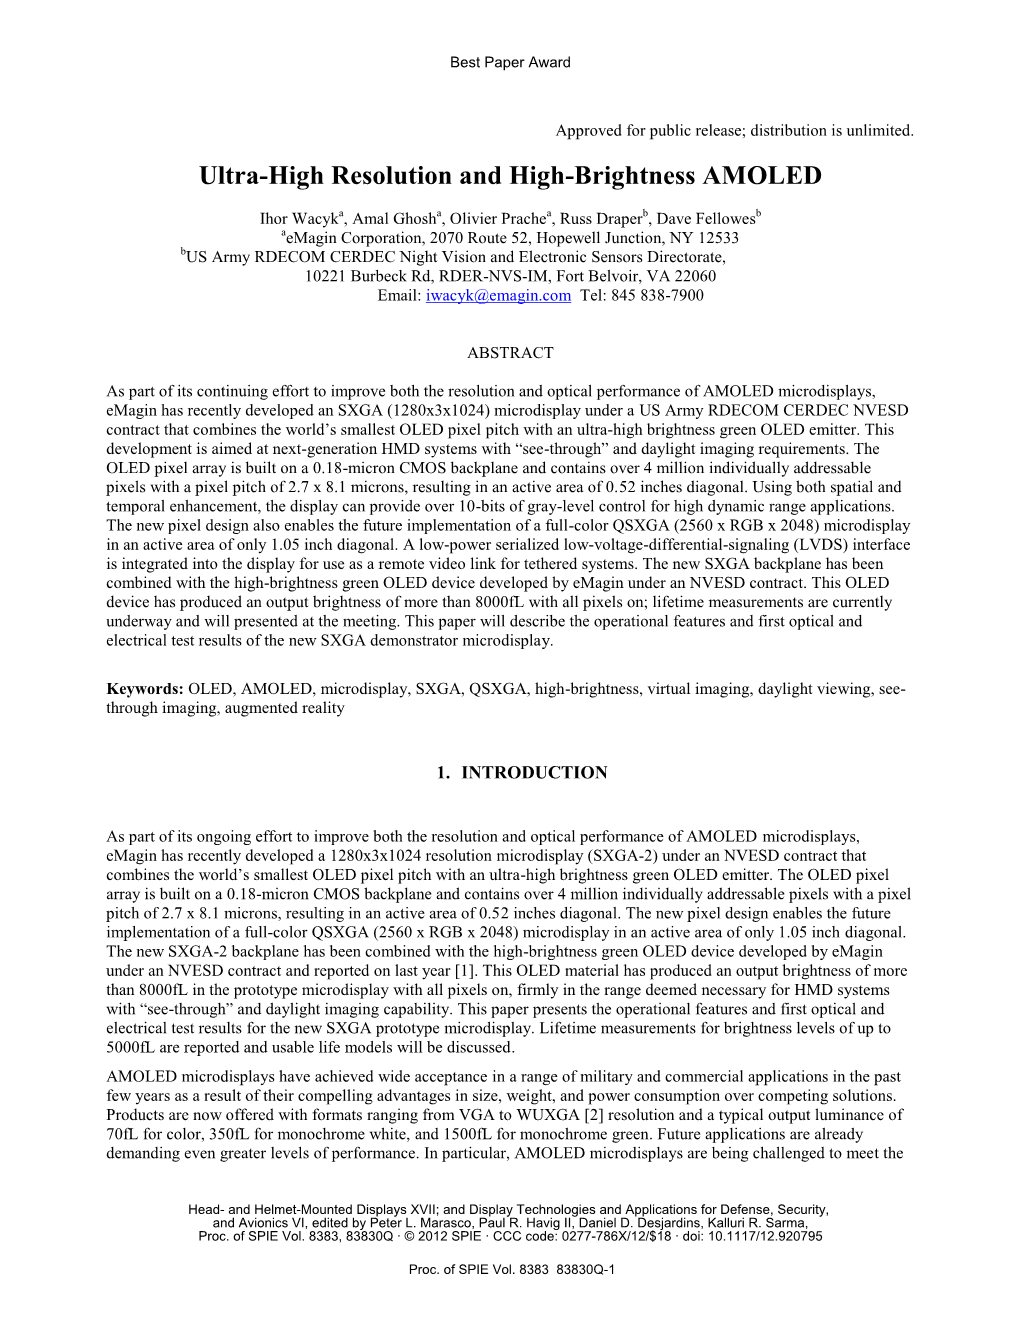 Ultra-High Resolution and High-Brightness AMOLED [8383-25]